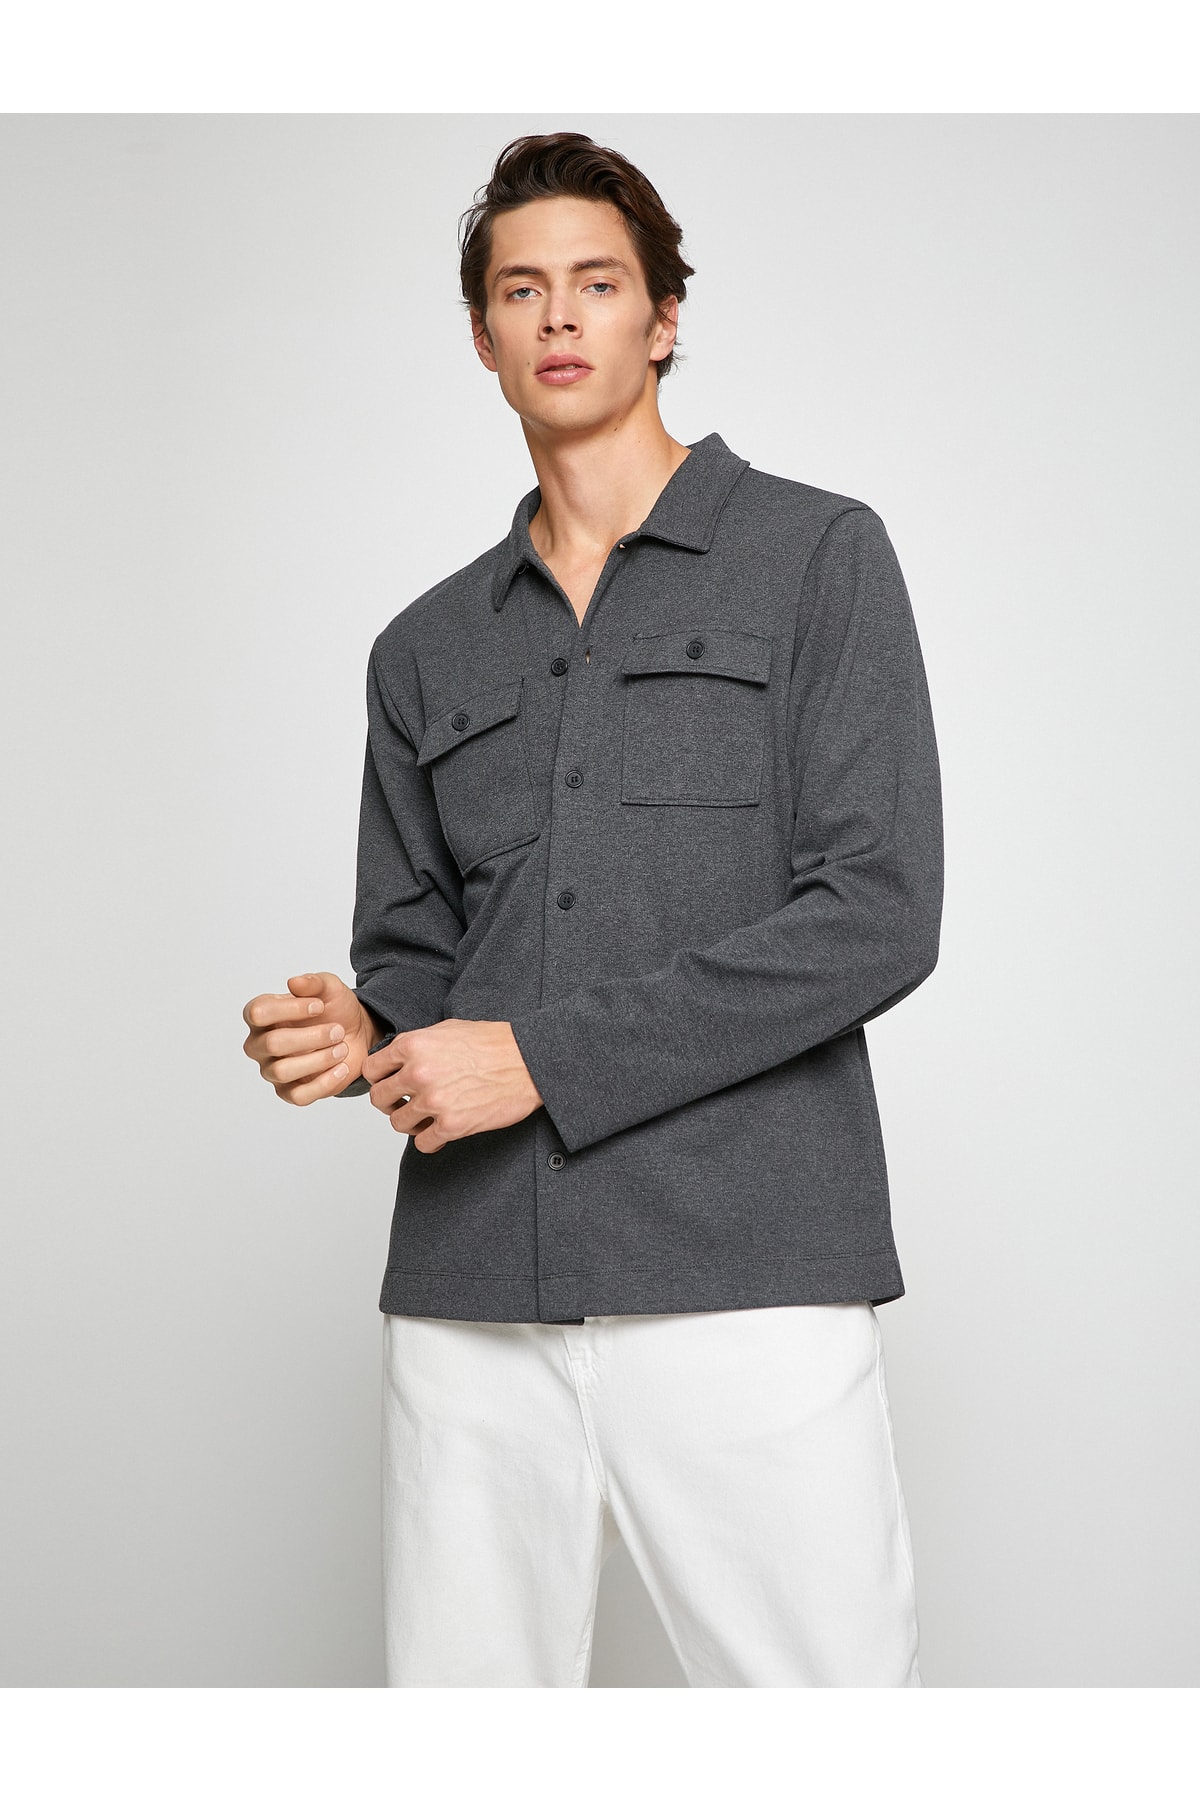 Koton Double Pocket Shirt Jacket Buttoned Classic Collar